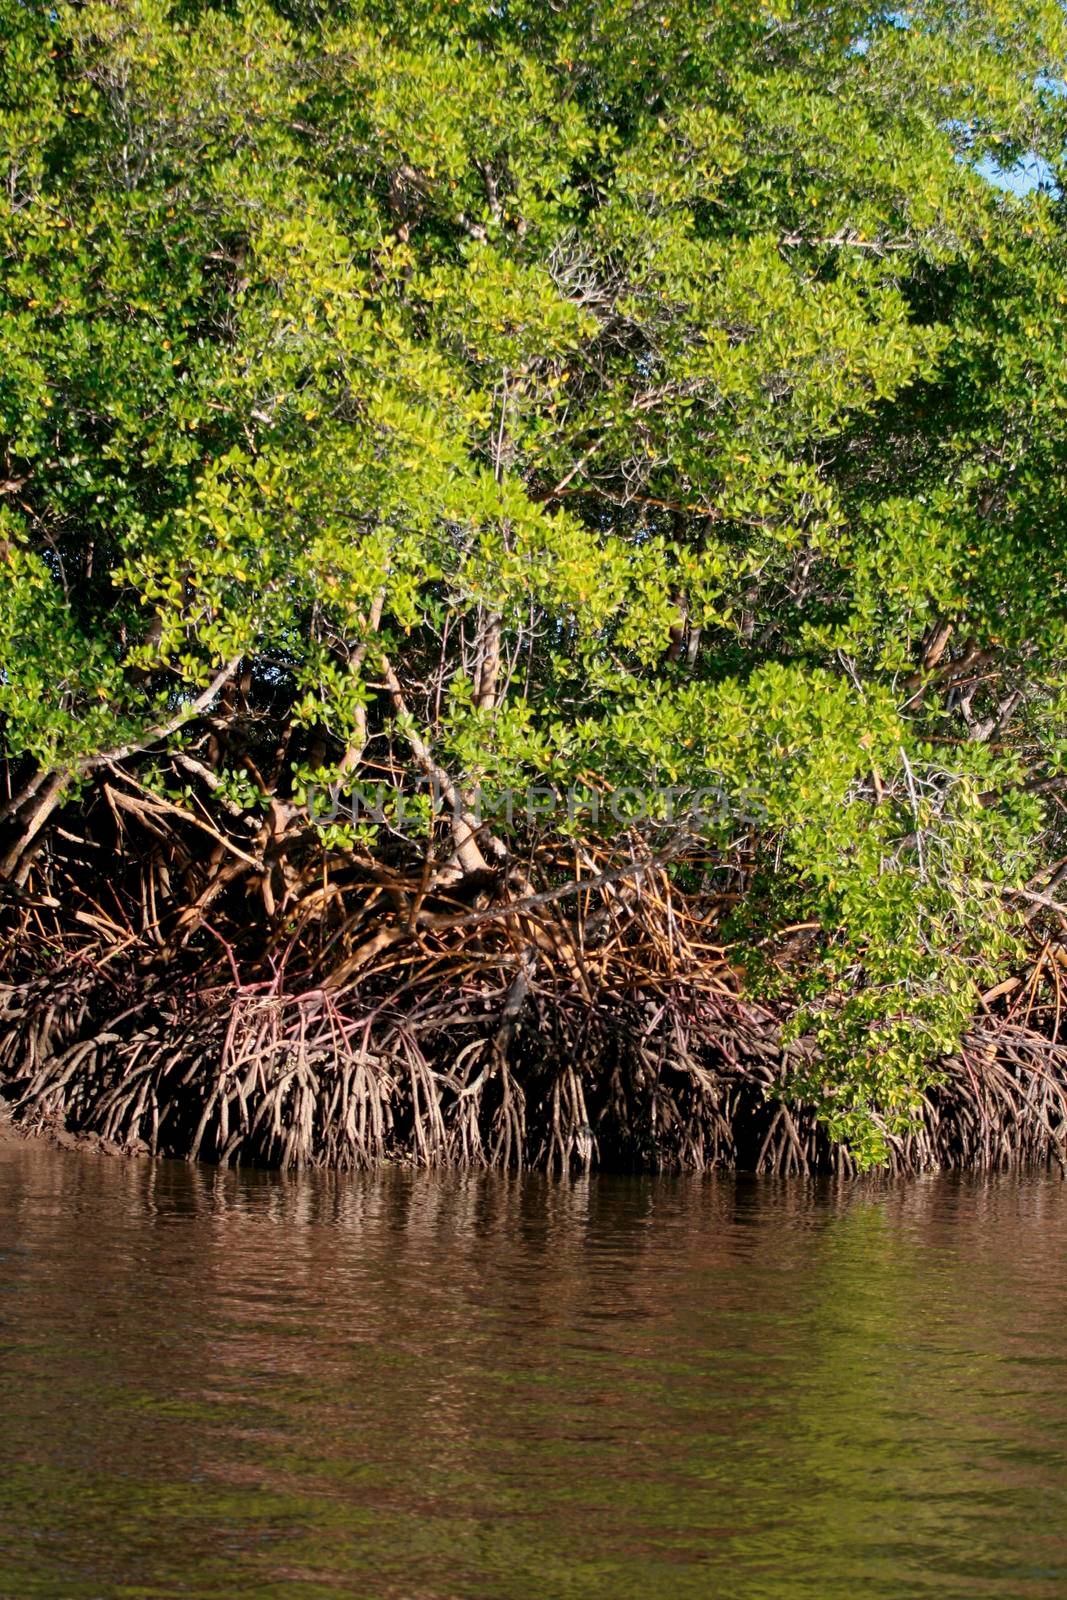 santa cruz cabralia, bahia / brazil - july 26, 2008: mangroves are seen on the banks of the Joao de Tiba river in the district of Santo Andre in the municipality of Santa Cruz Cabralia.



